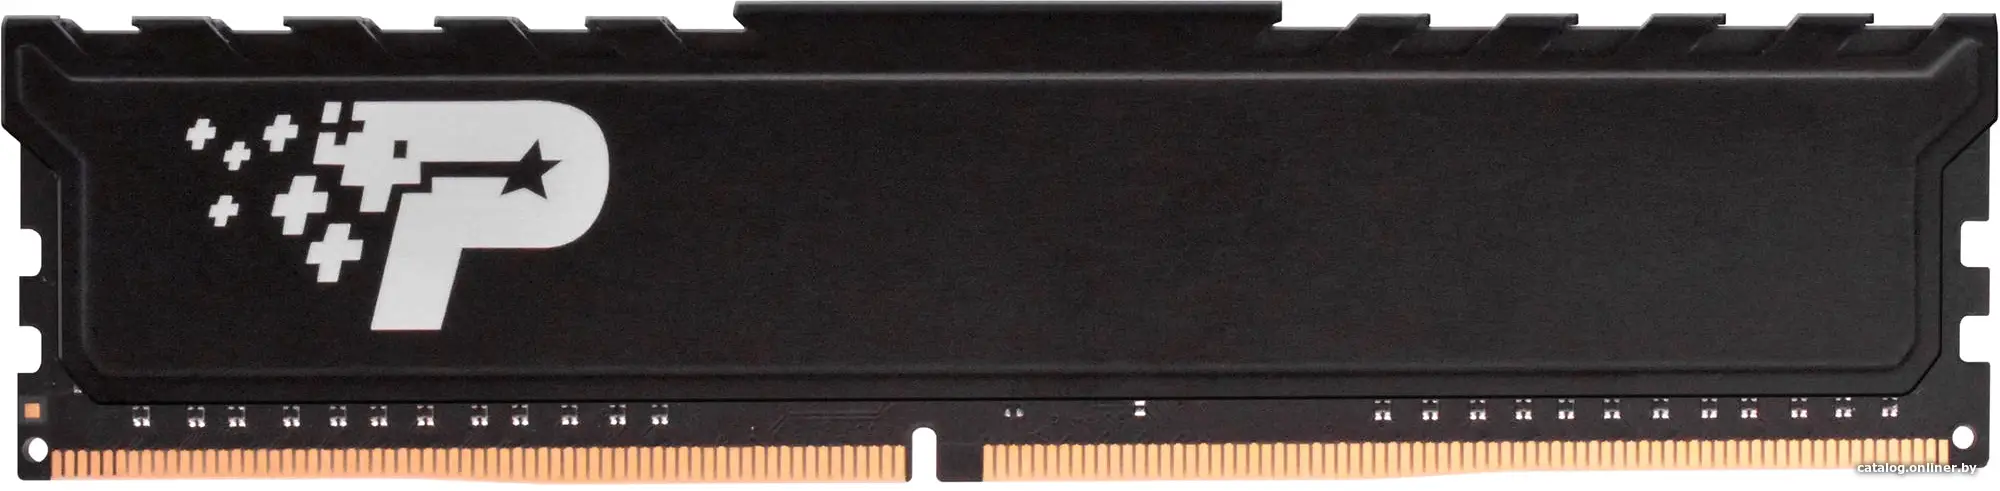 Купить Оперативная память Patriot DDR 4 DIMM 8Gb PC21300 2666Mhz (PSP48G266681H1), цена, опт и розница